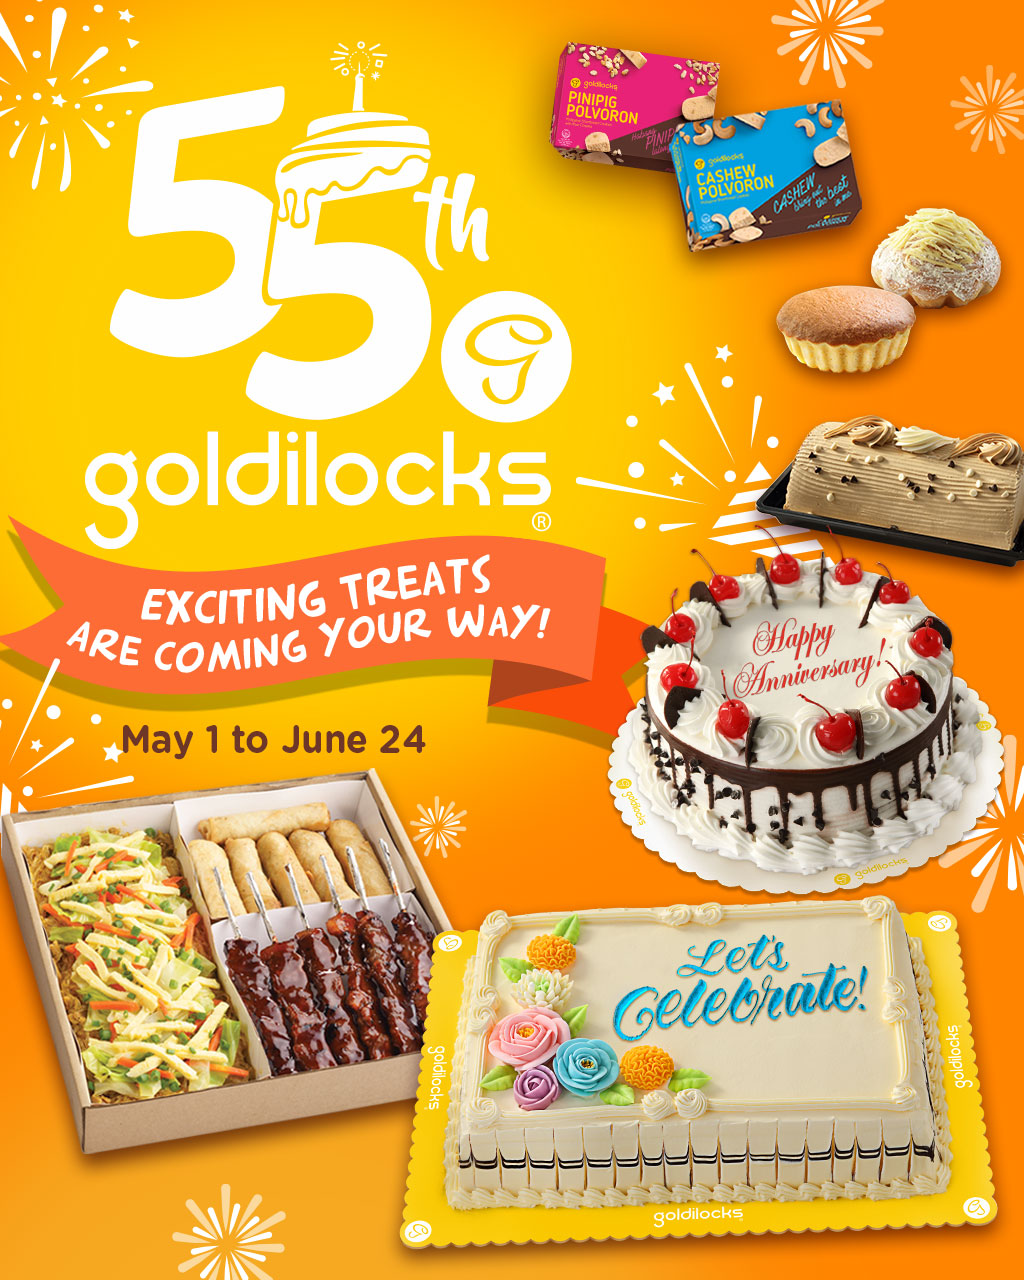 Goldilocks 55th Anniversary Treats